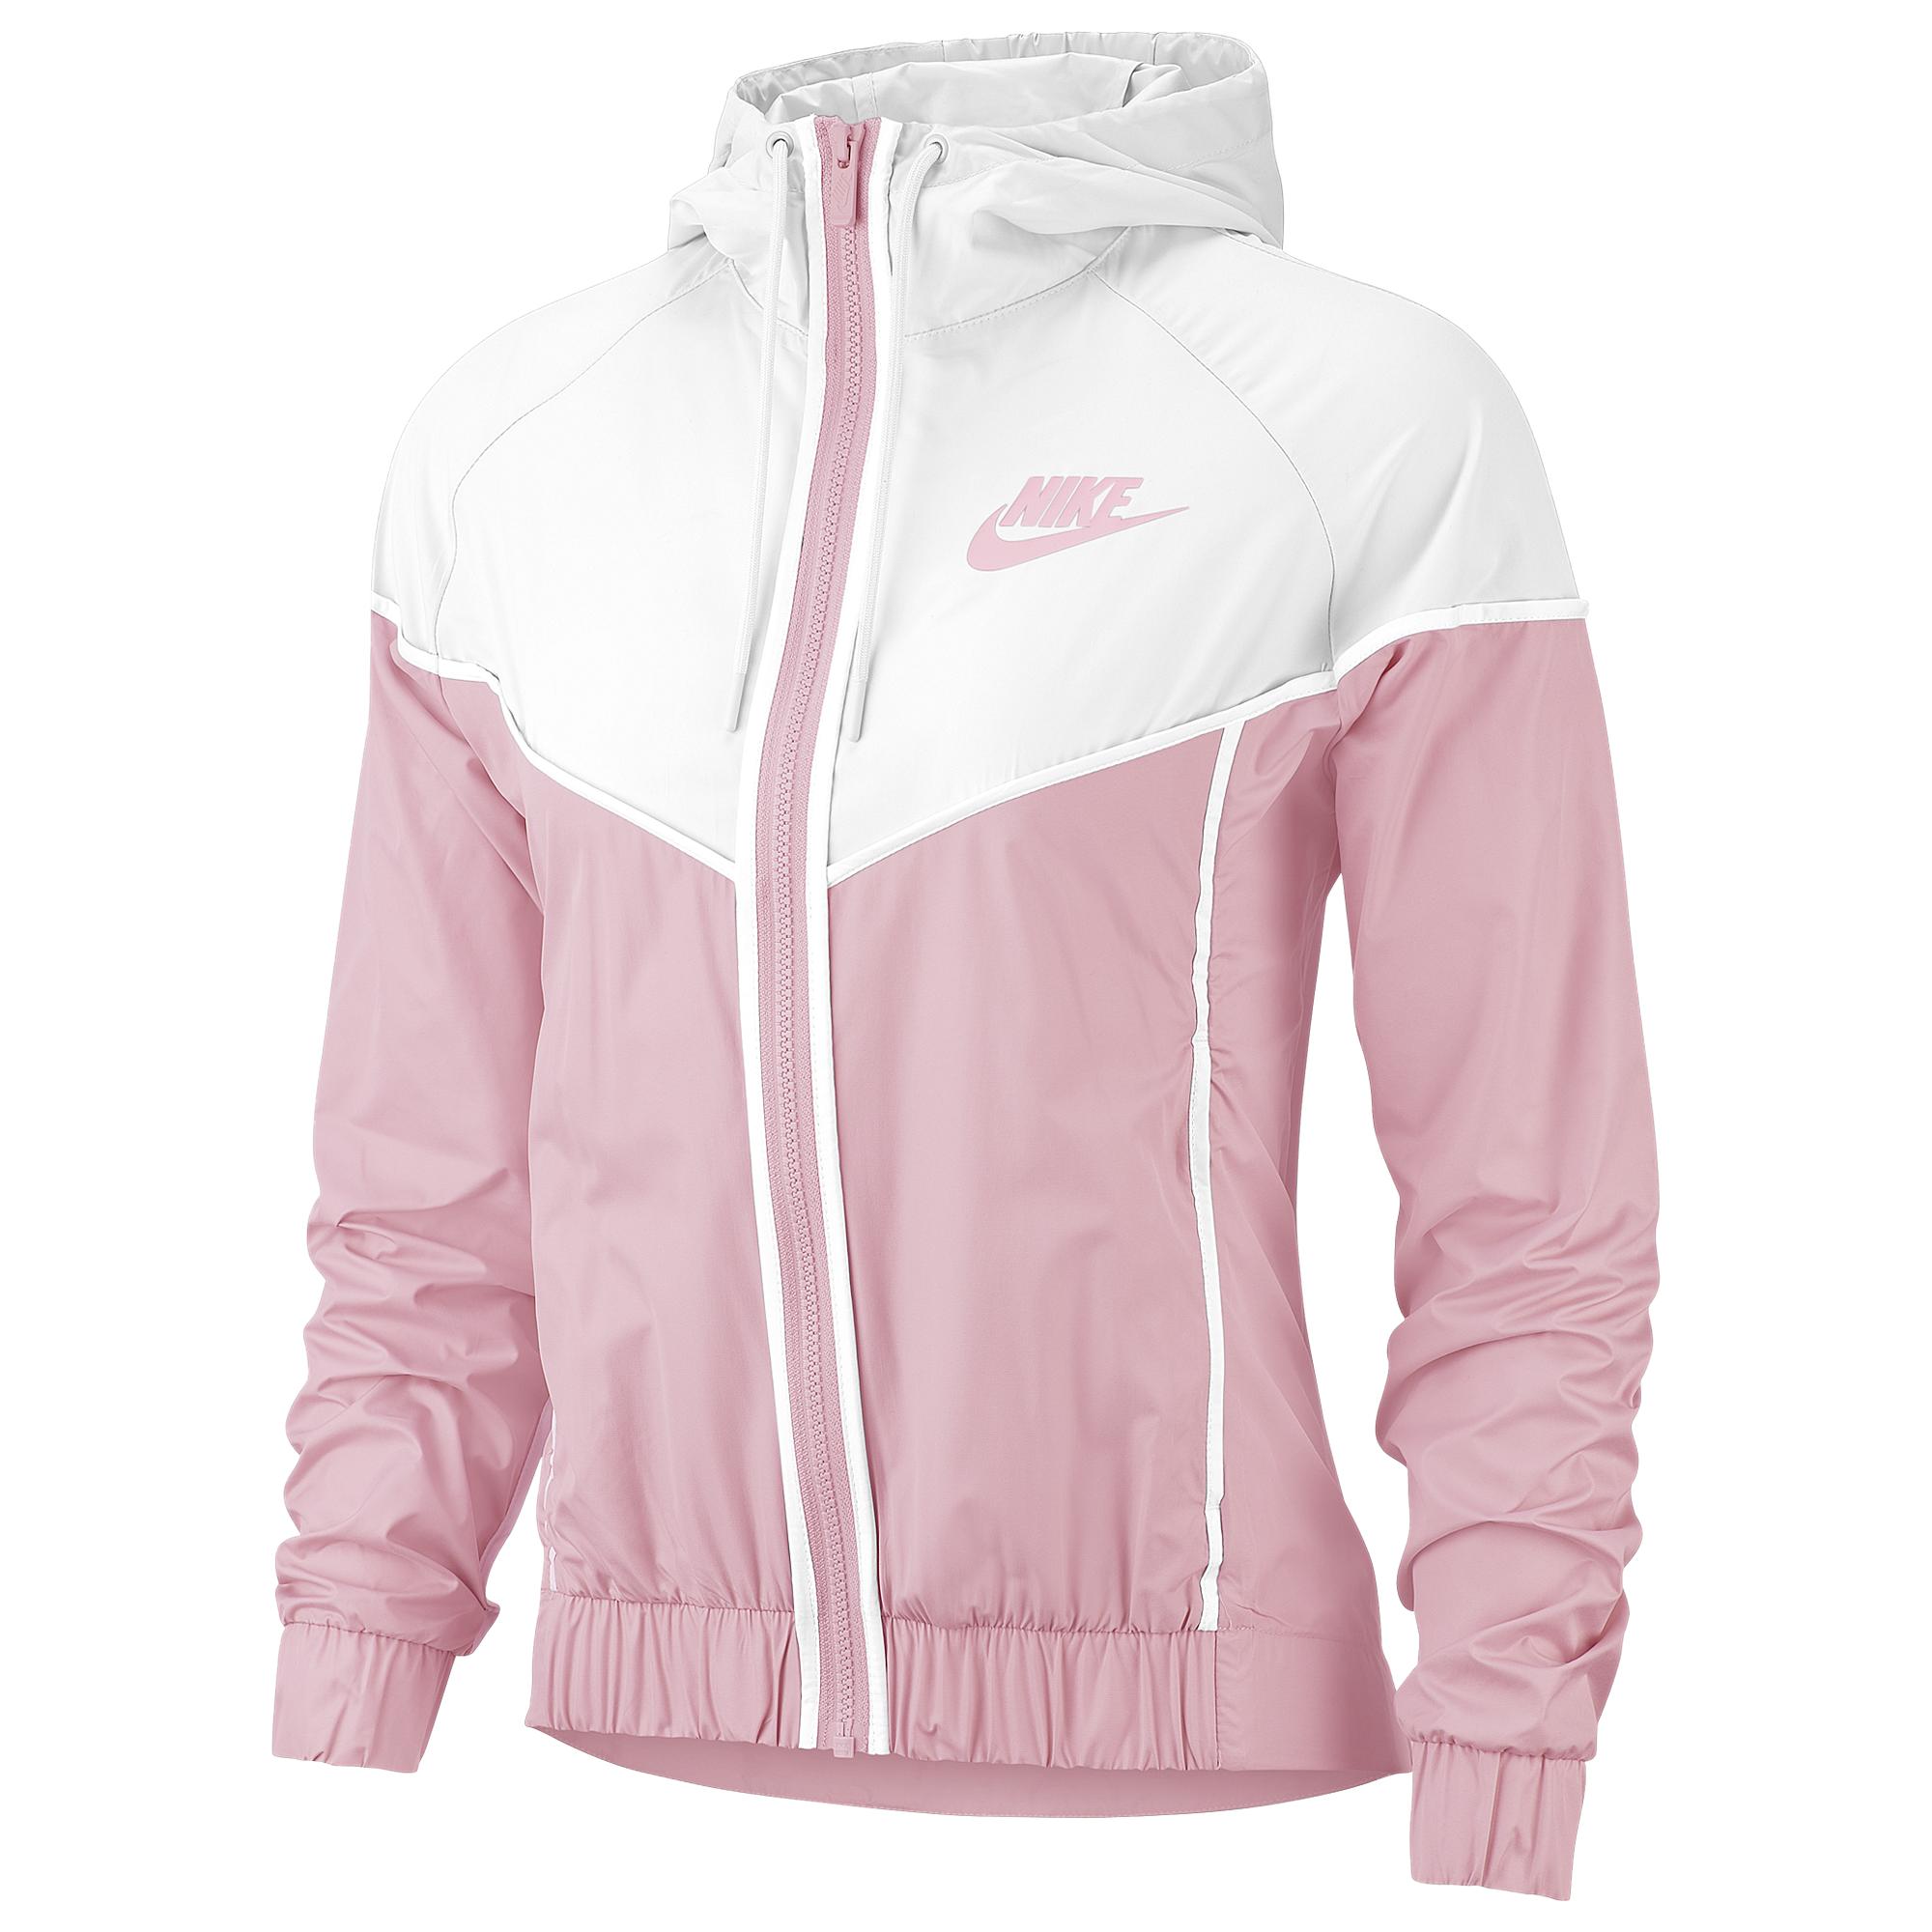 Nike Windrunner Jacket in Pink - Lyst